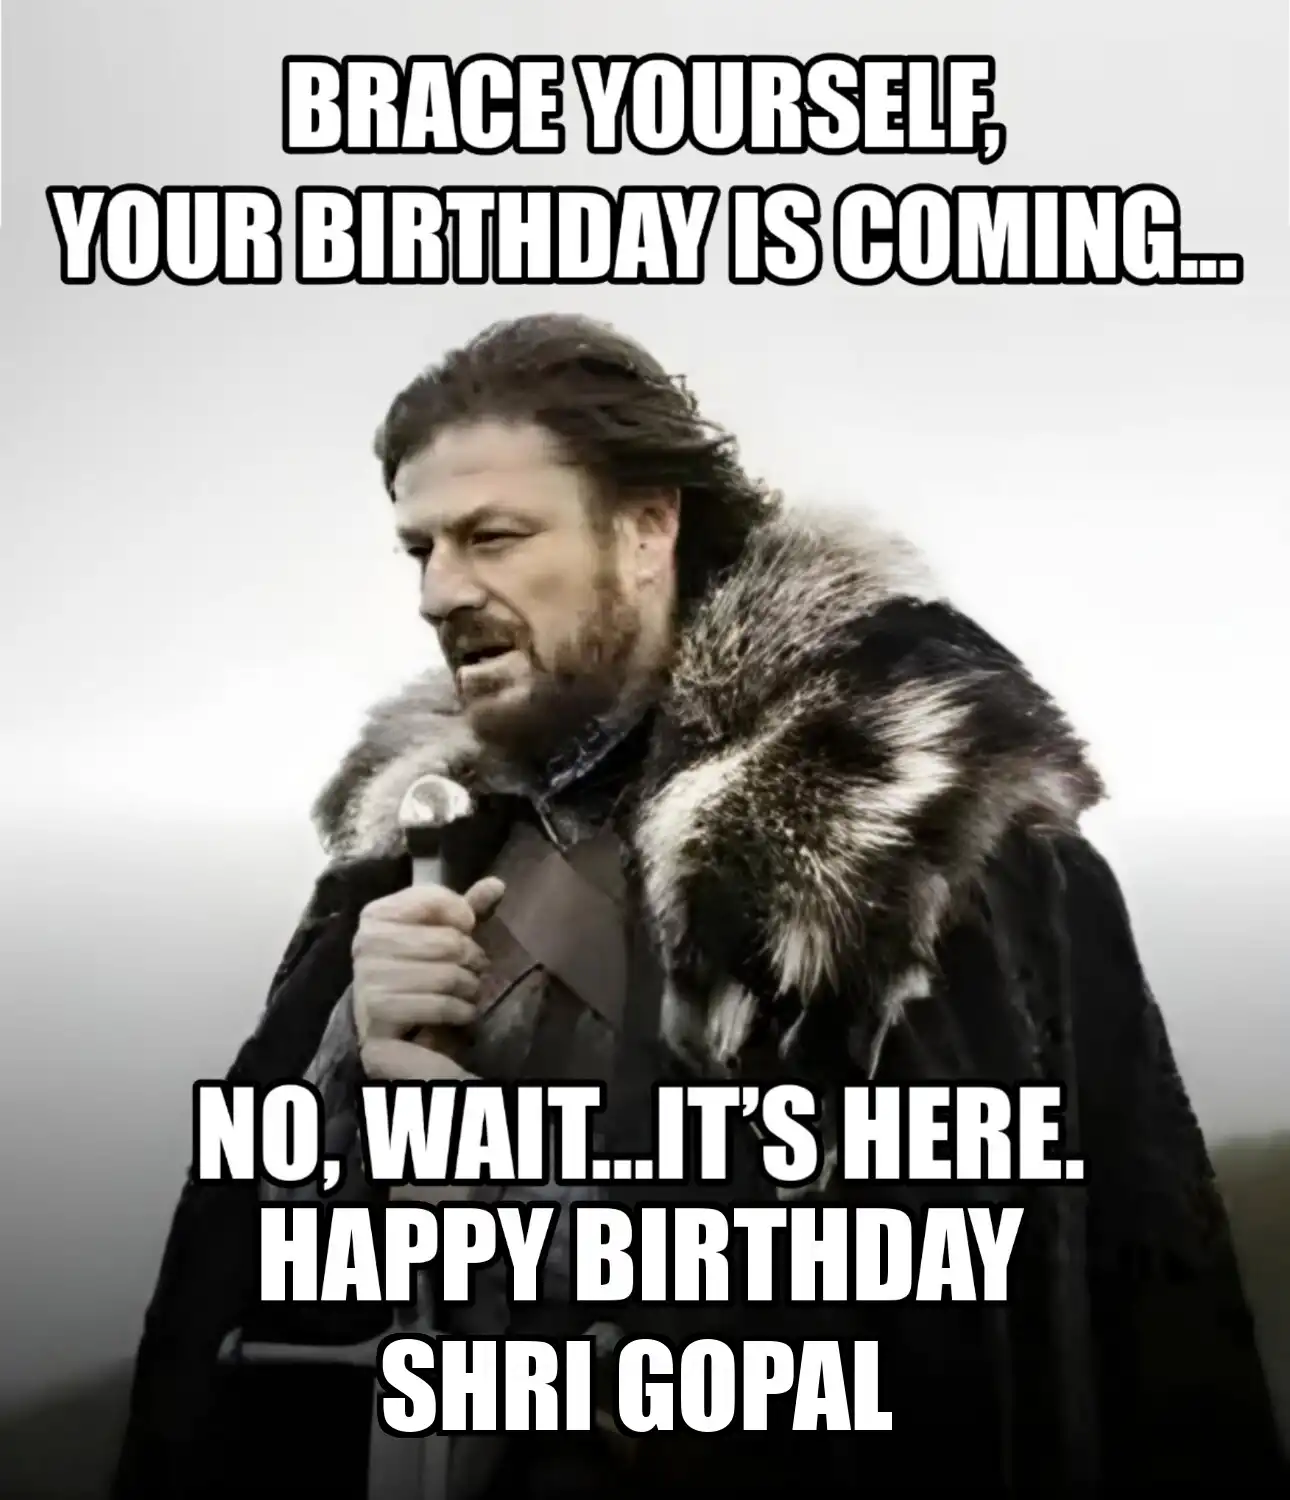 Happy Birthday Shri Gopal Brace Yourself Your Birthday Is Coming Meme